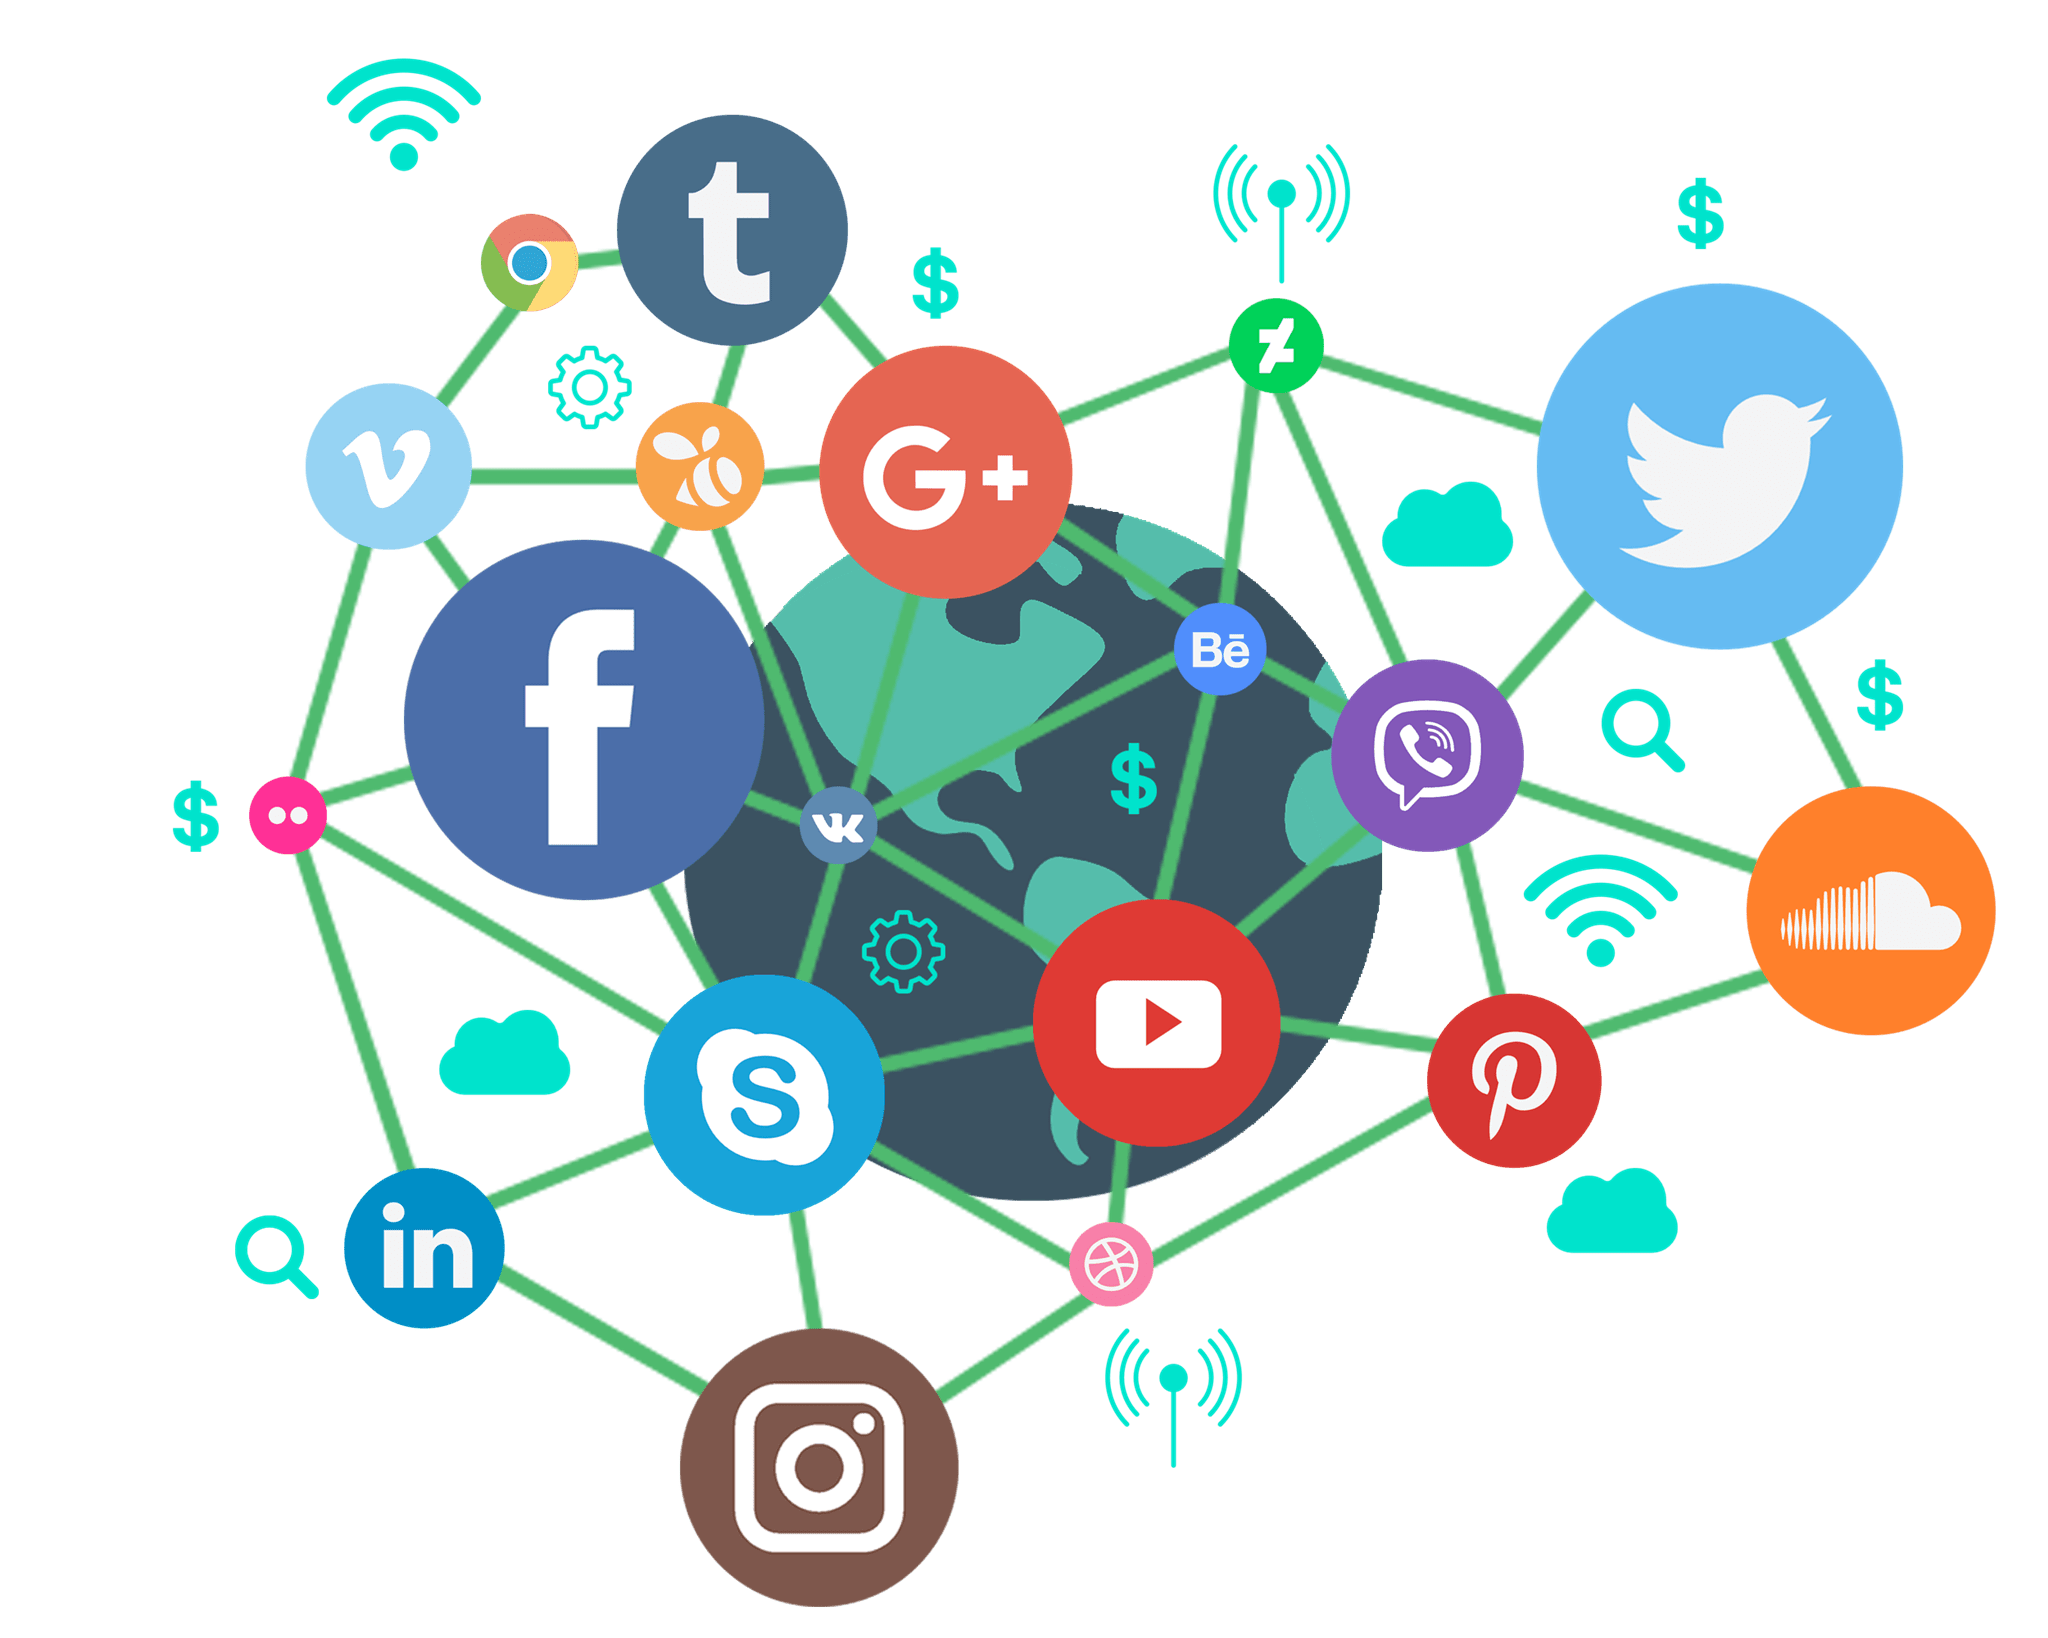 بازاریابی شبکه اجتماعی